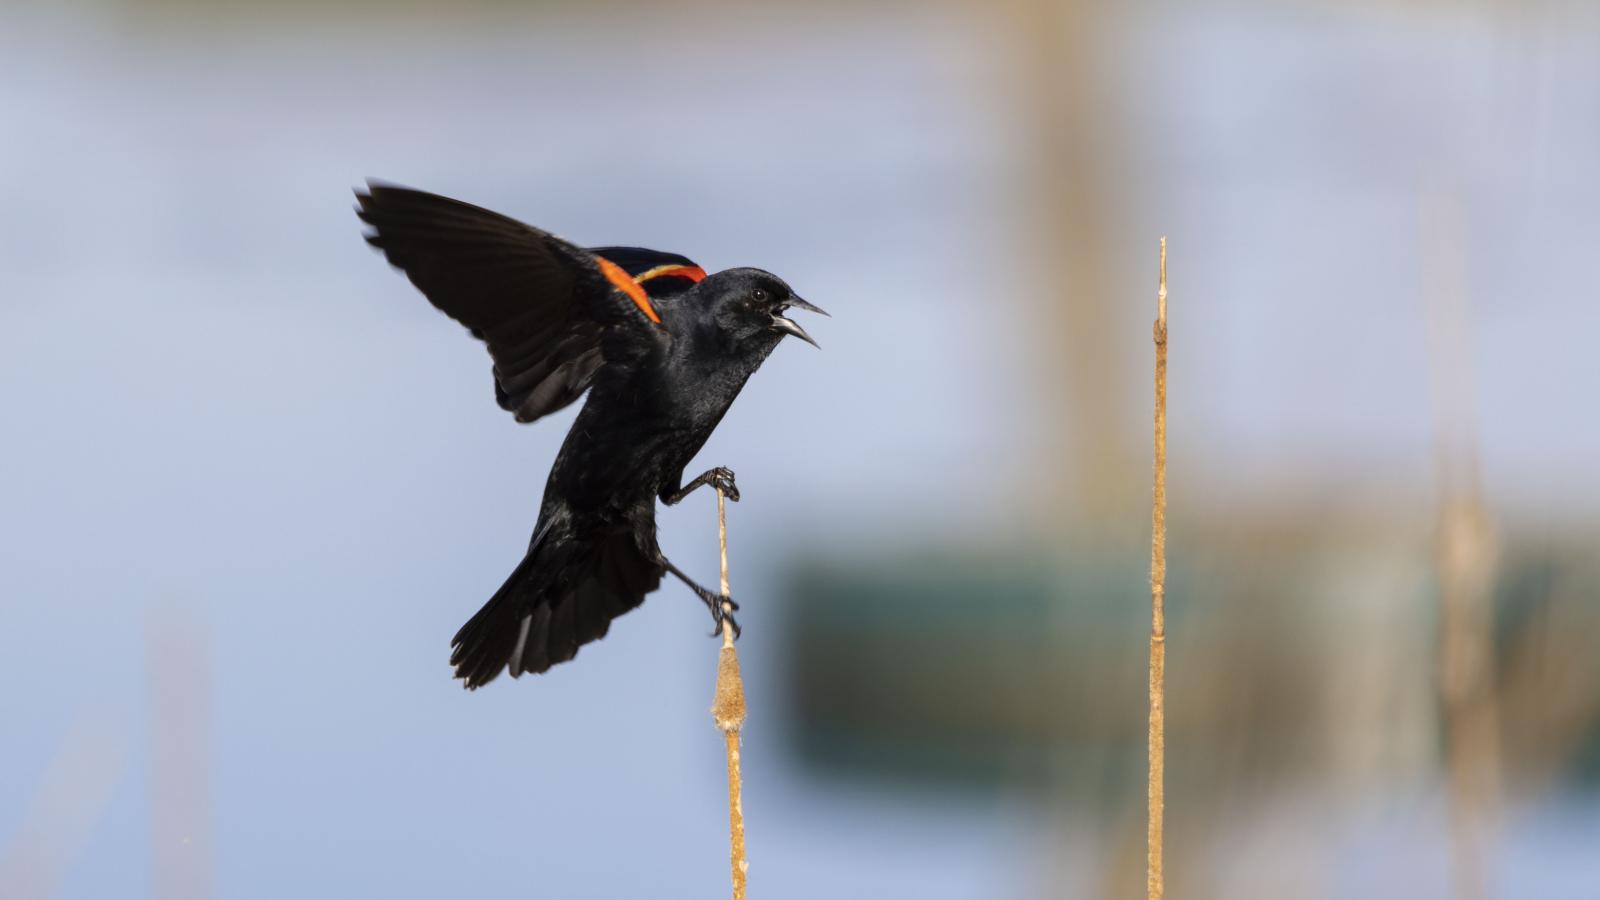 Bird landing on a twig with wings still open